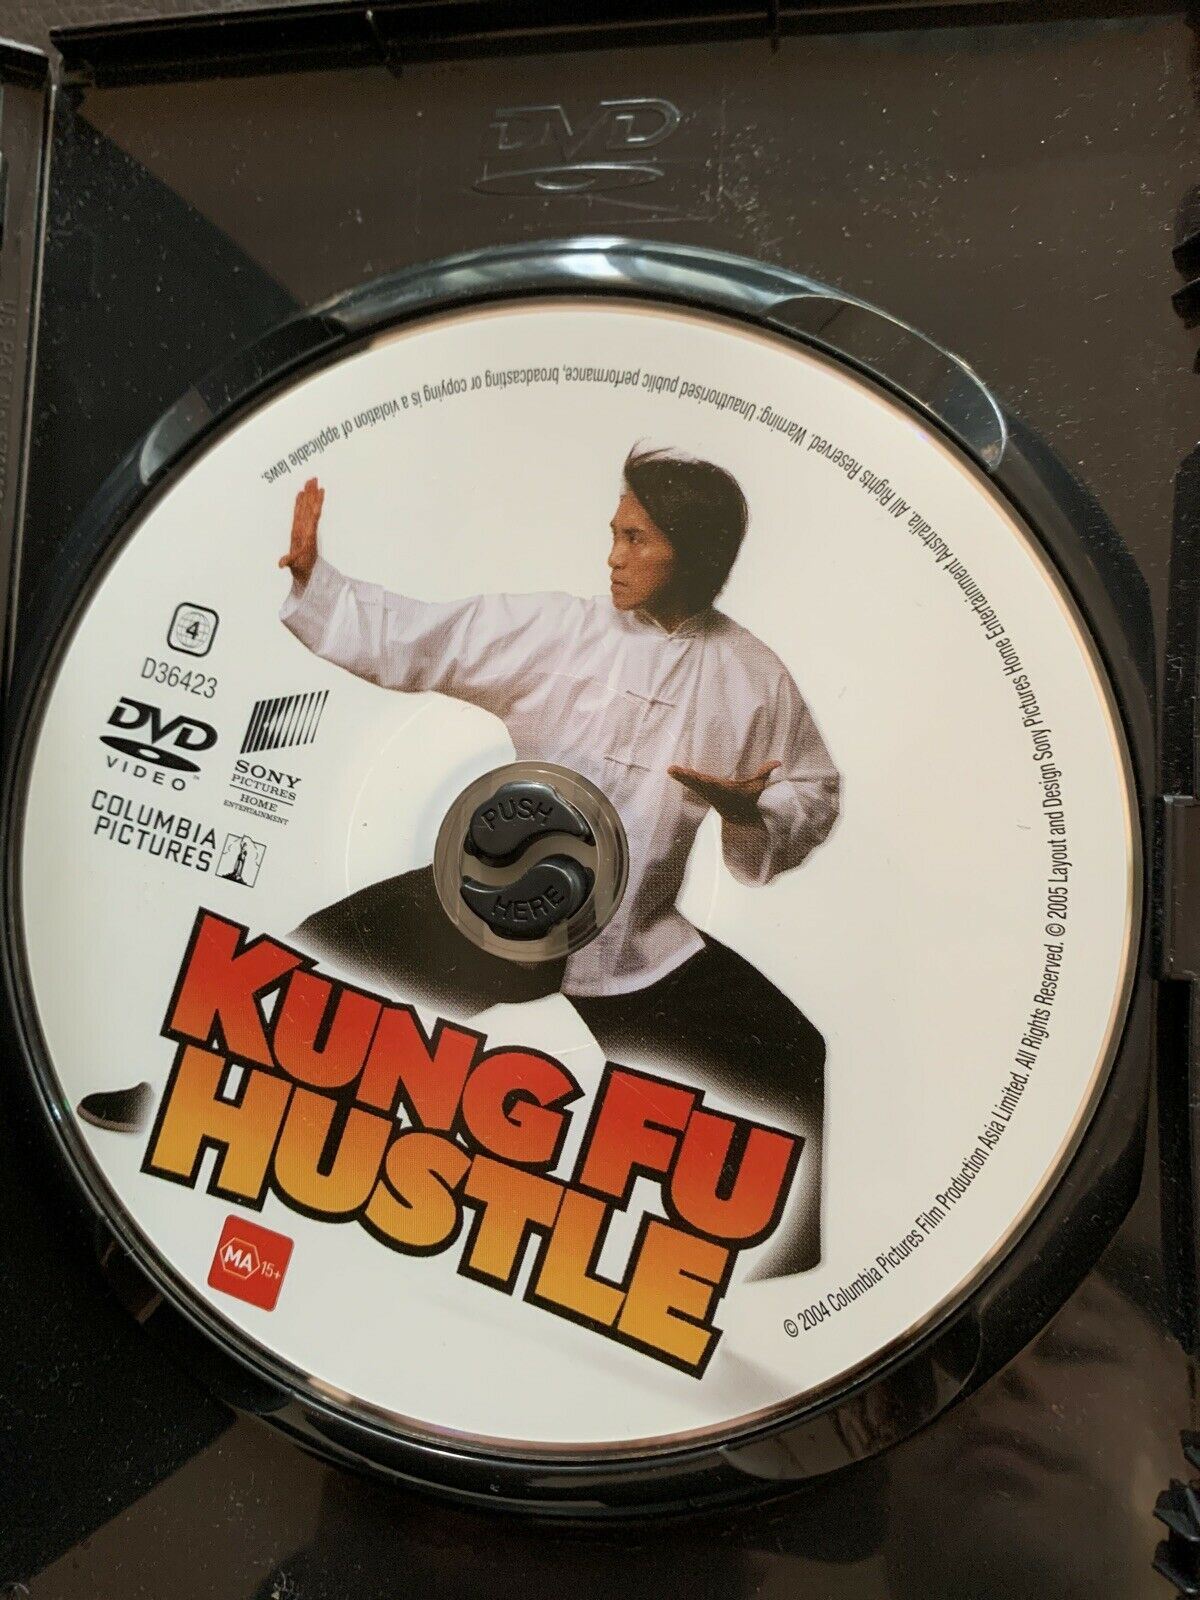 Kung Fu Hustle (DVD, 2004) Stephen Chow. Region 4